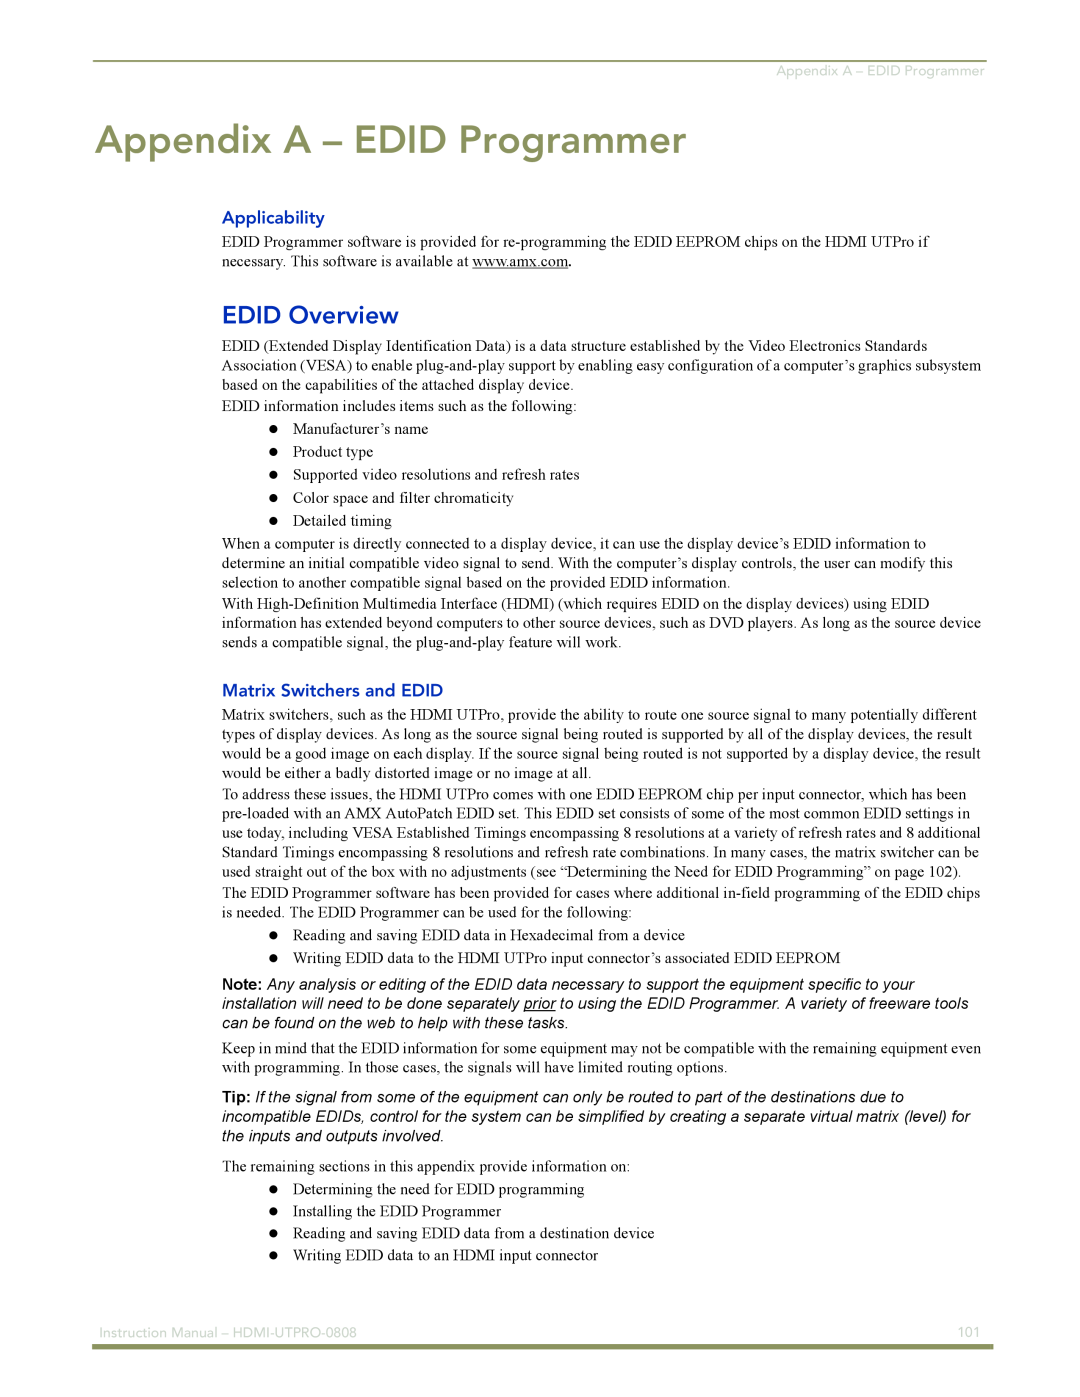 AMX HDMI-UTPRO-0808 instruction manual Appendix A – EDID Programmer, EDID Overview 